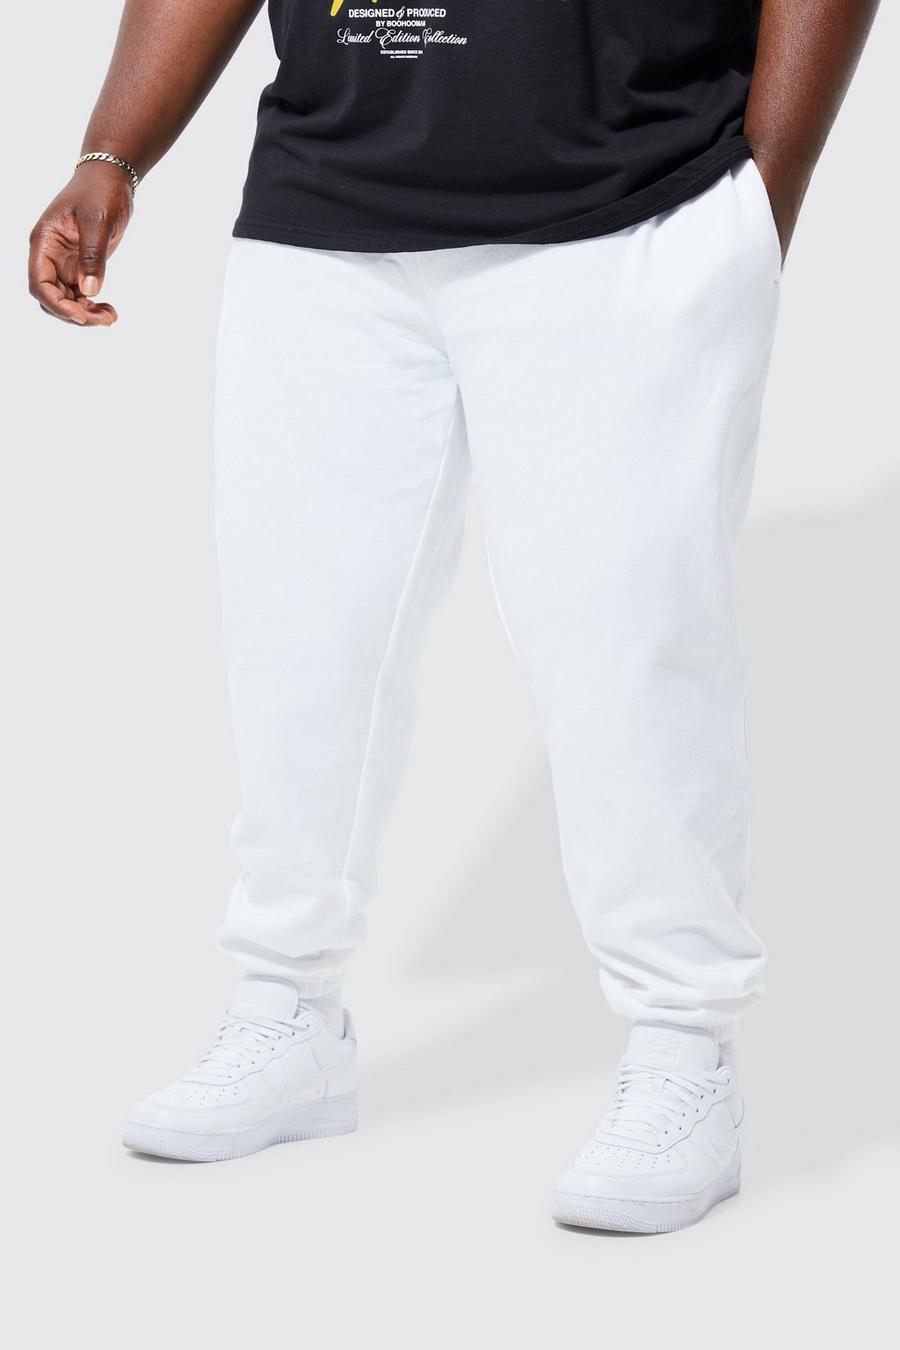 Pantaloni tuta Plus Size Basic, White blanco